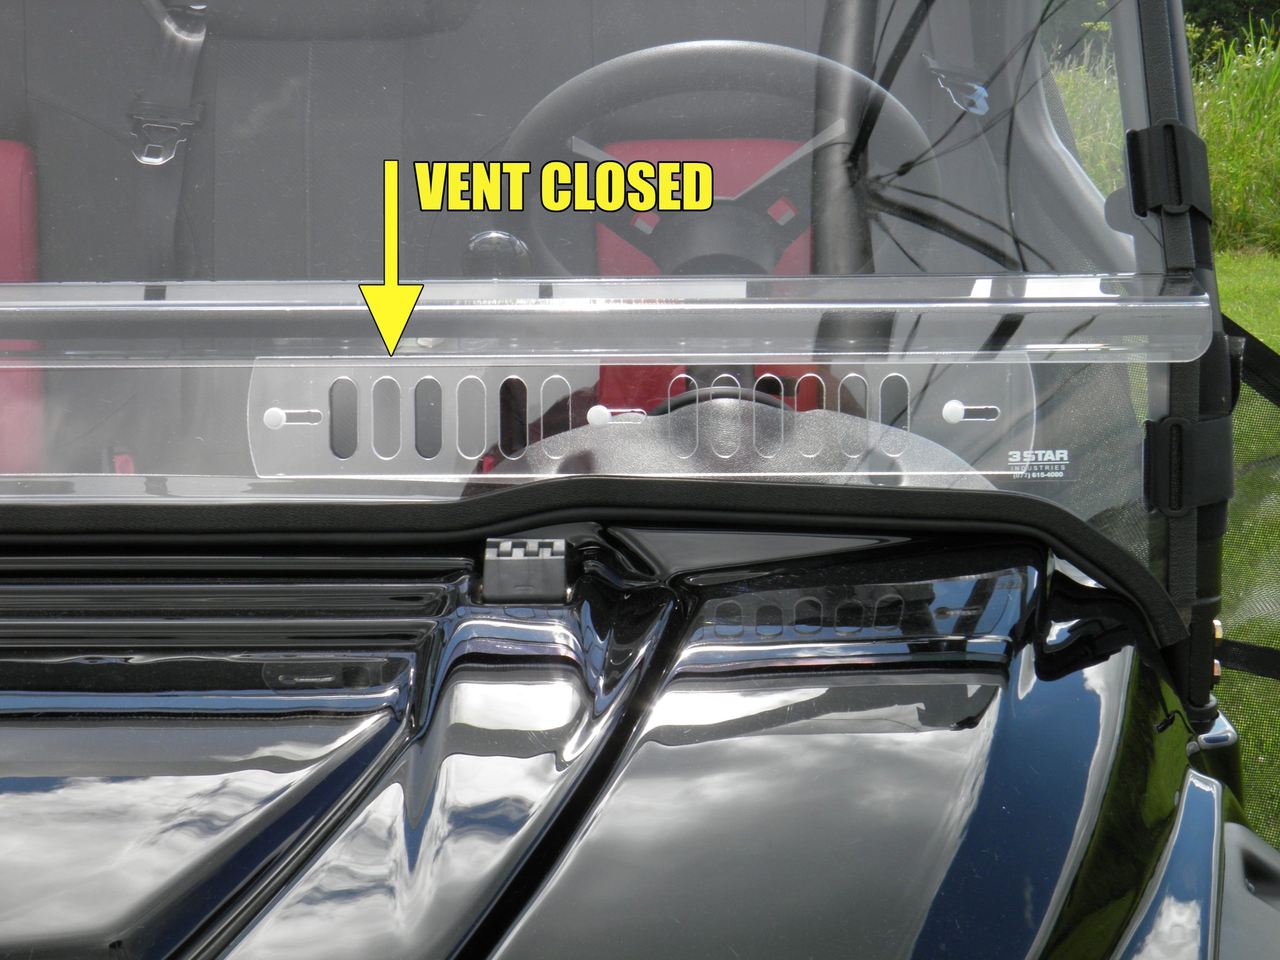 3 Star side x side CF Moto U-Force 1000 windshield vents closed